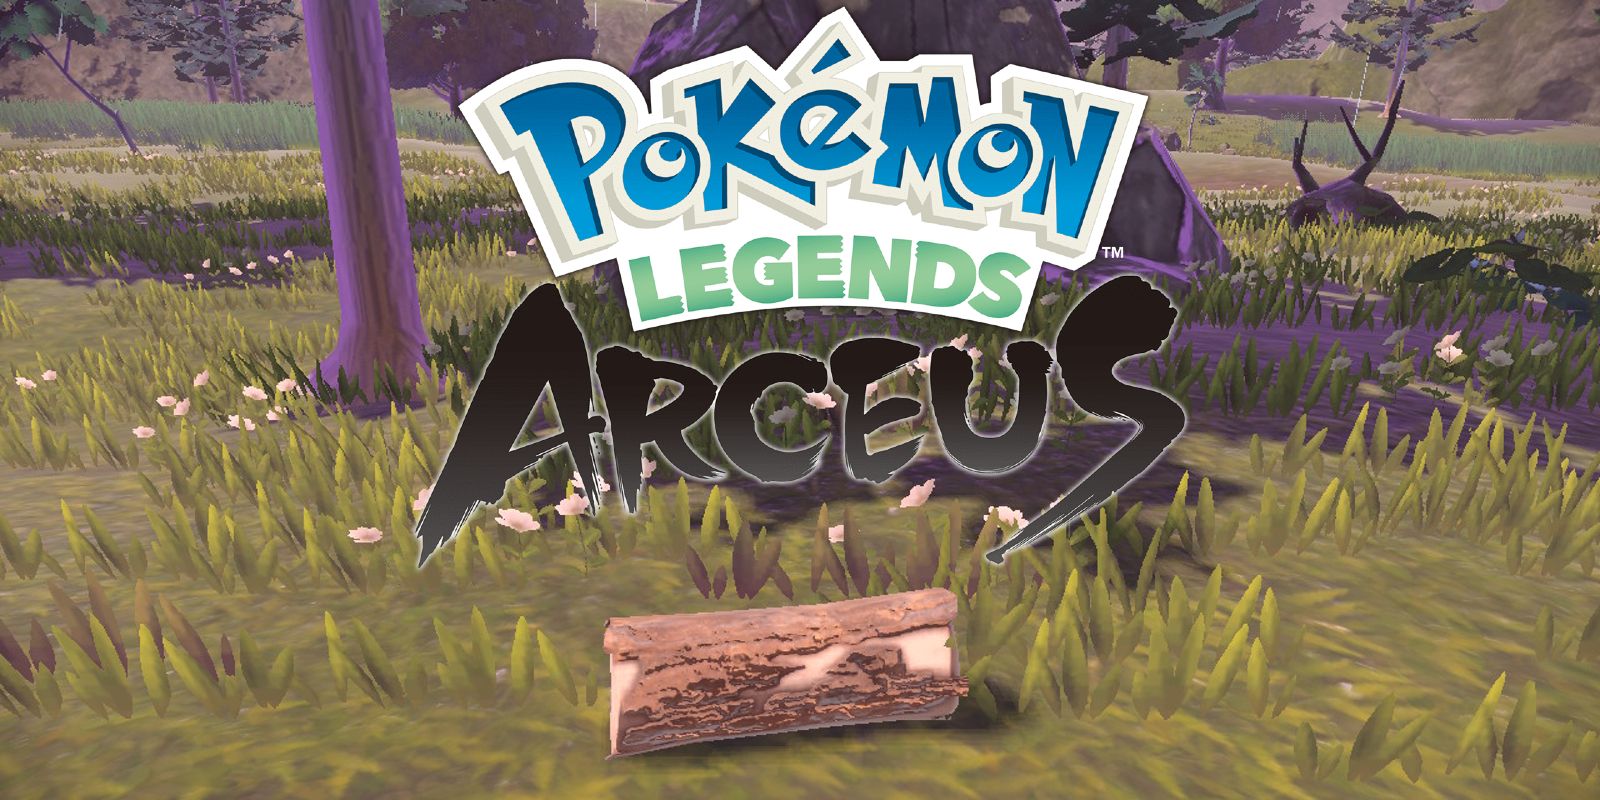 The logo for Pokémon Legends Arceus above a large piece of wood